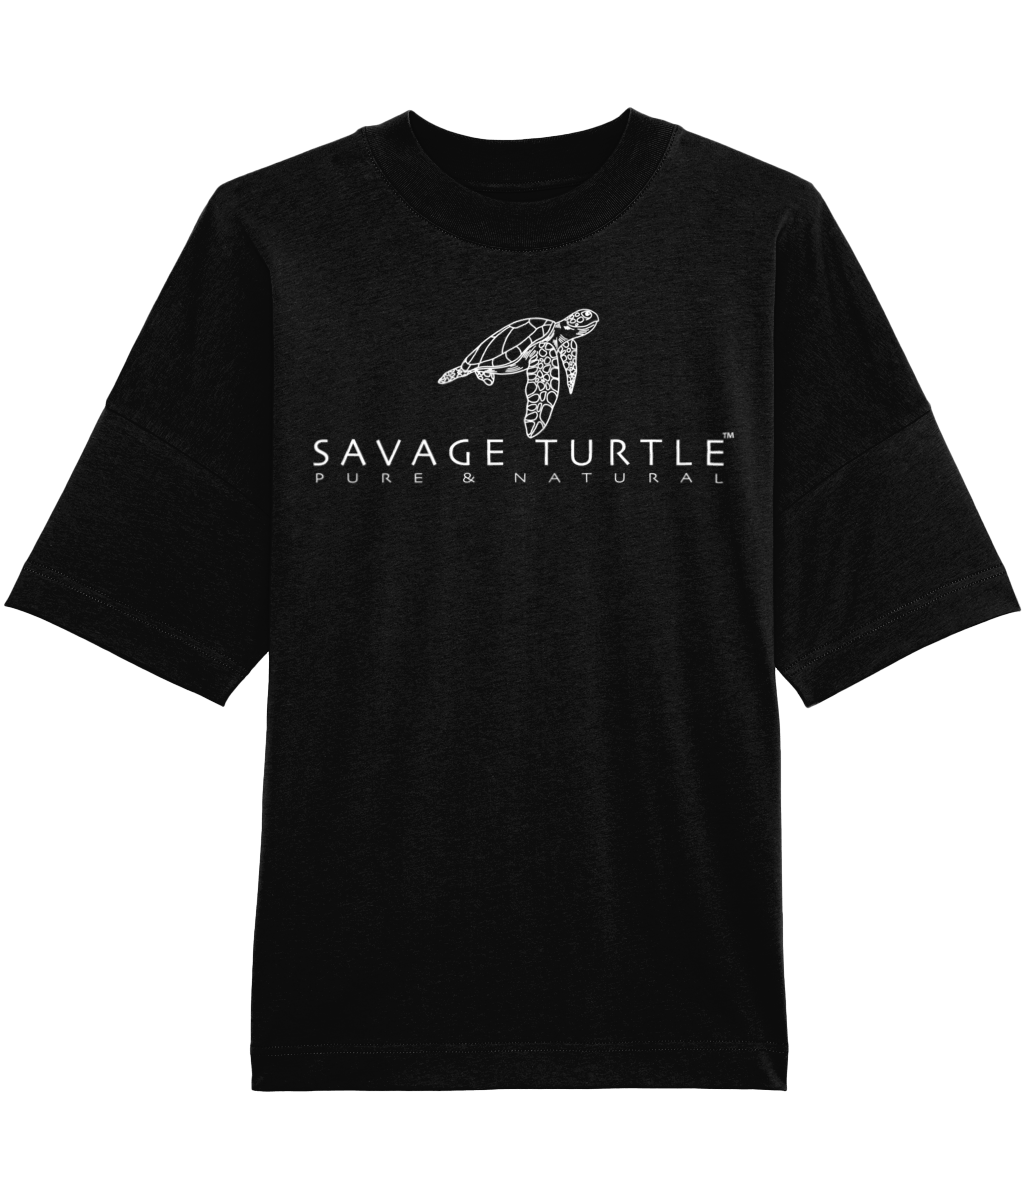 T-shirt Black Oversized Classic Savage Turtle Logo